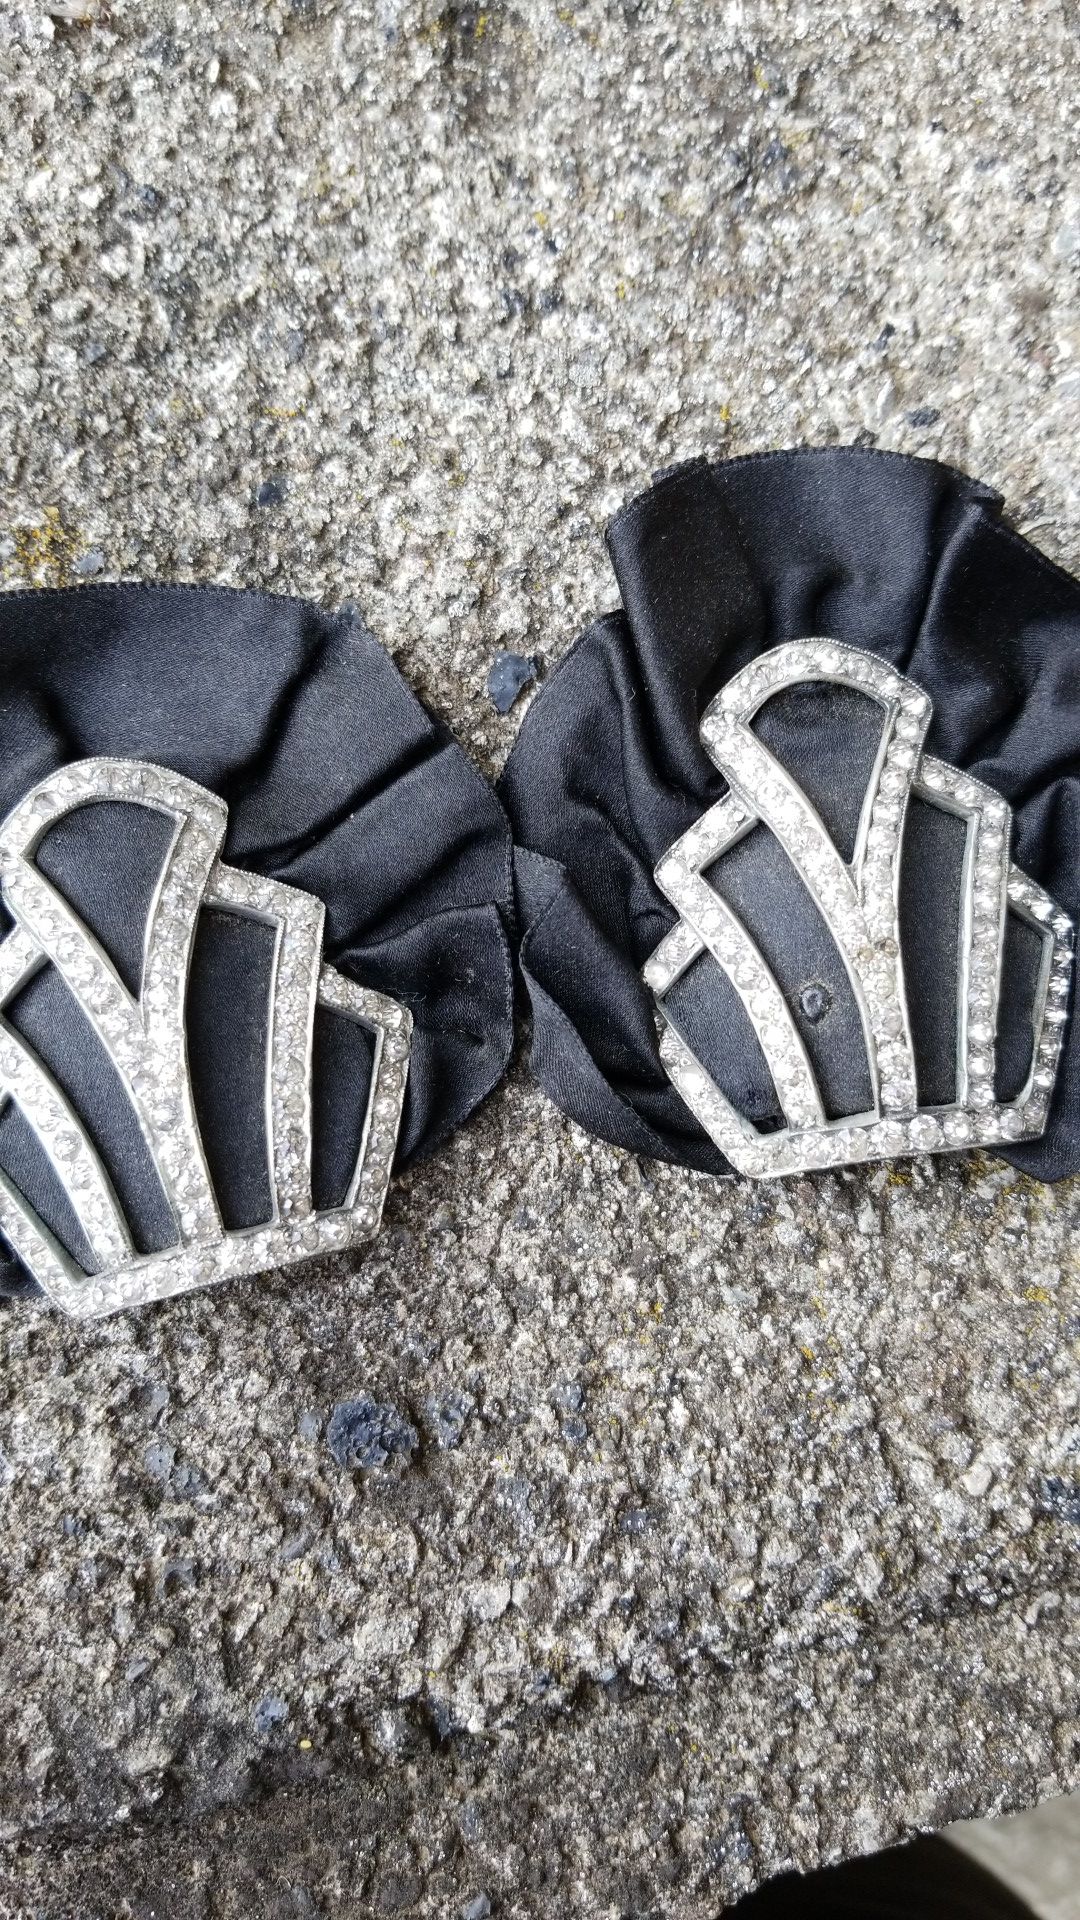 Vintage rhinestone shoe clips